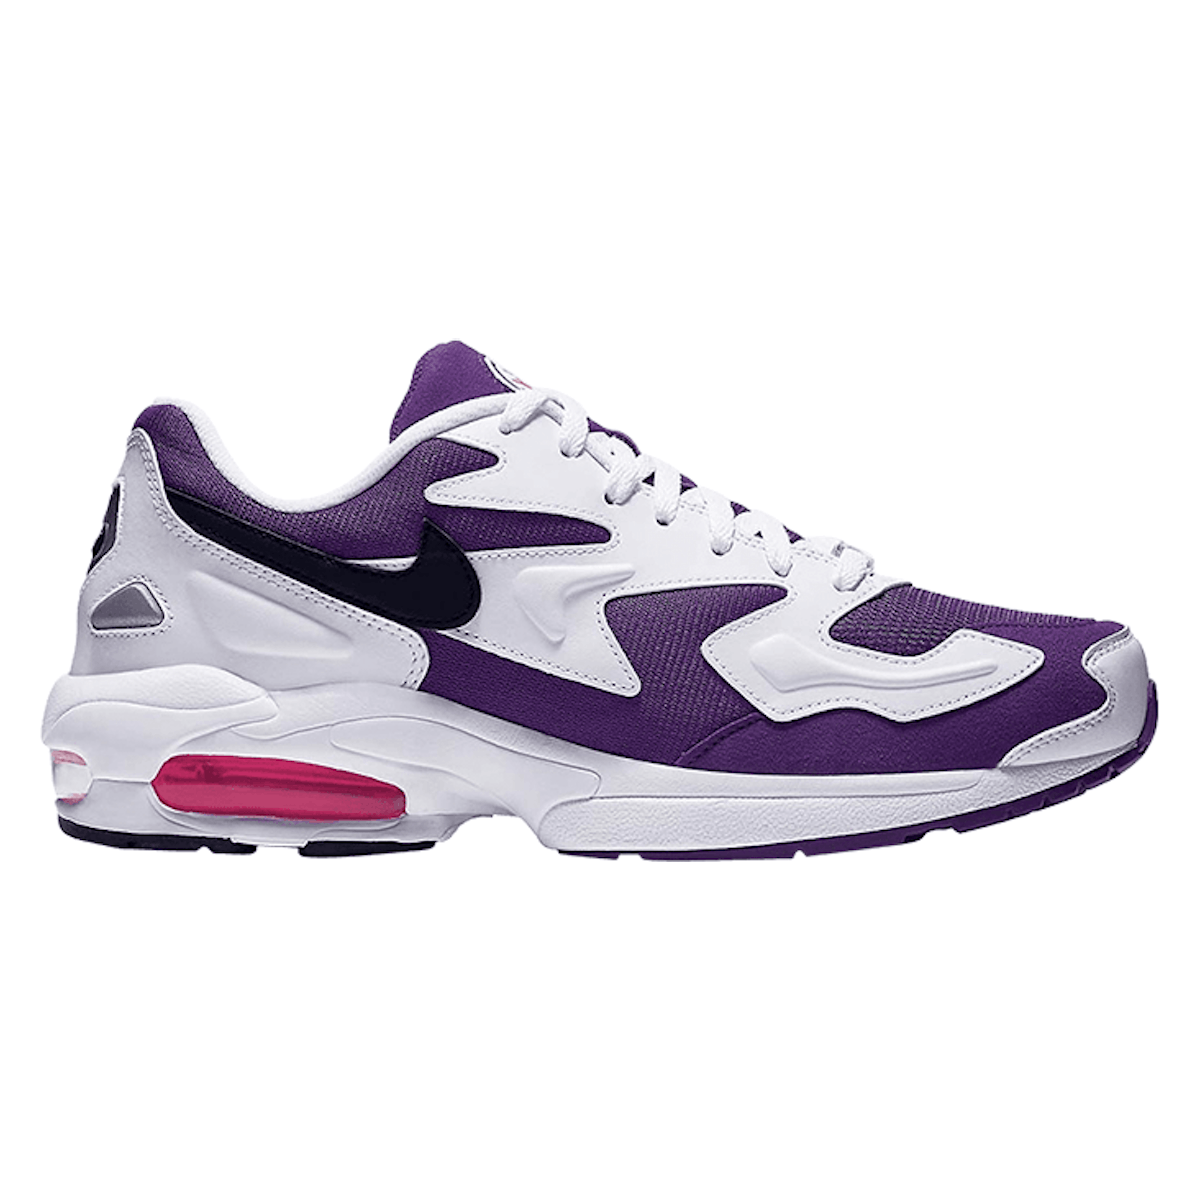 Nike Air Max 2 Light OG "Purple Berry"